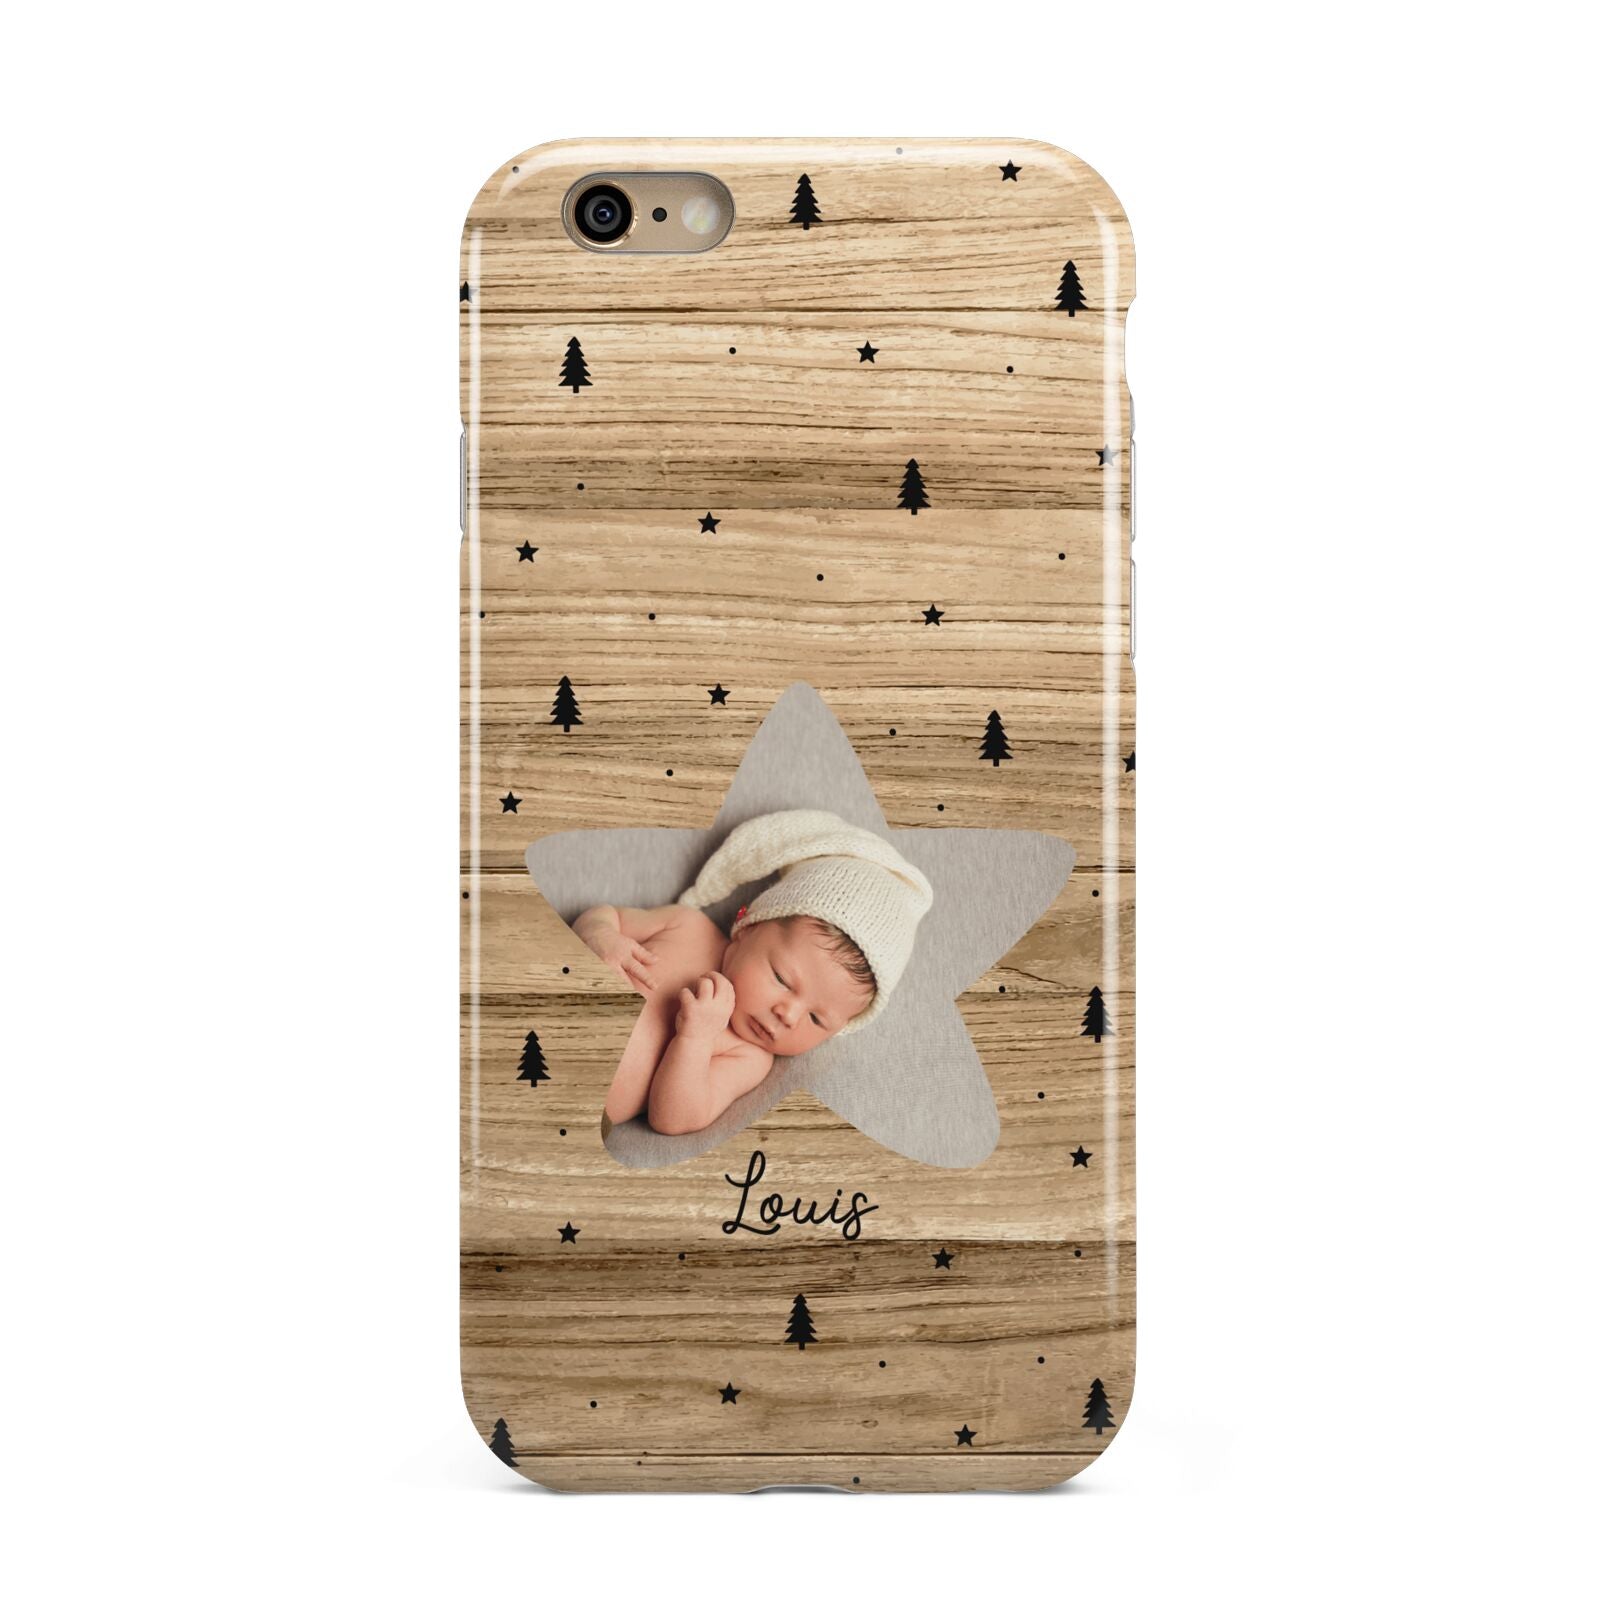 Baby Photo Upload Apple iPhone 6 3D Tough Case